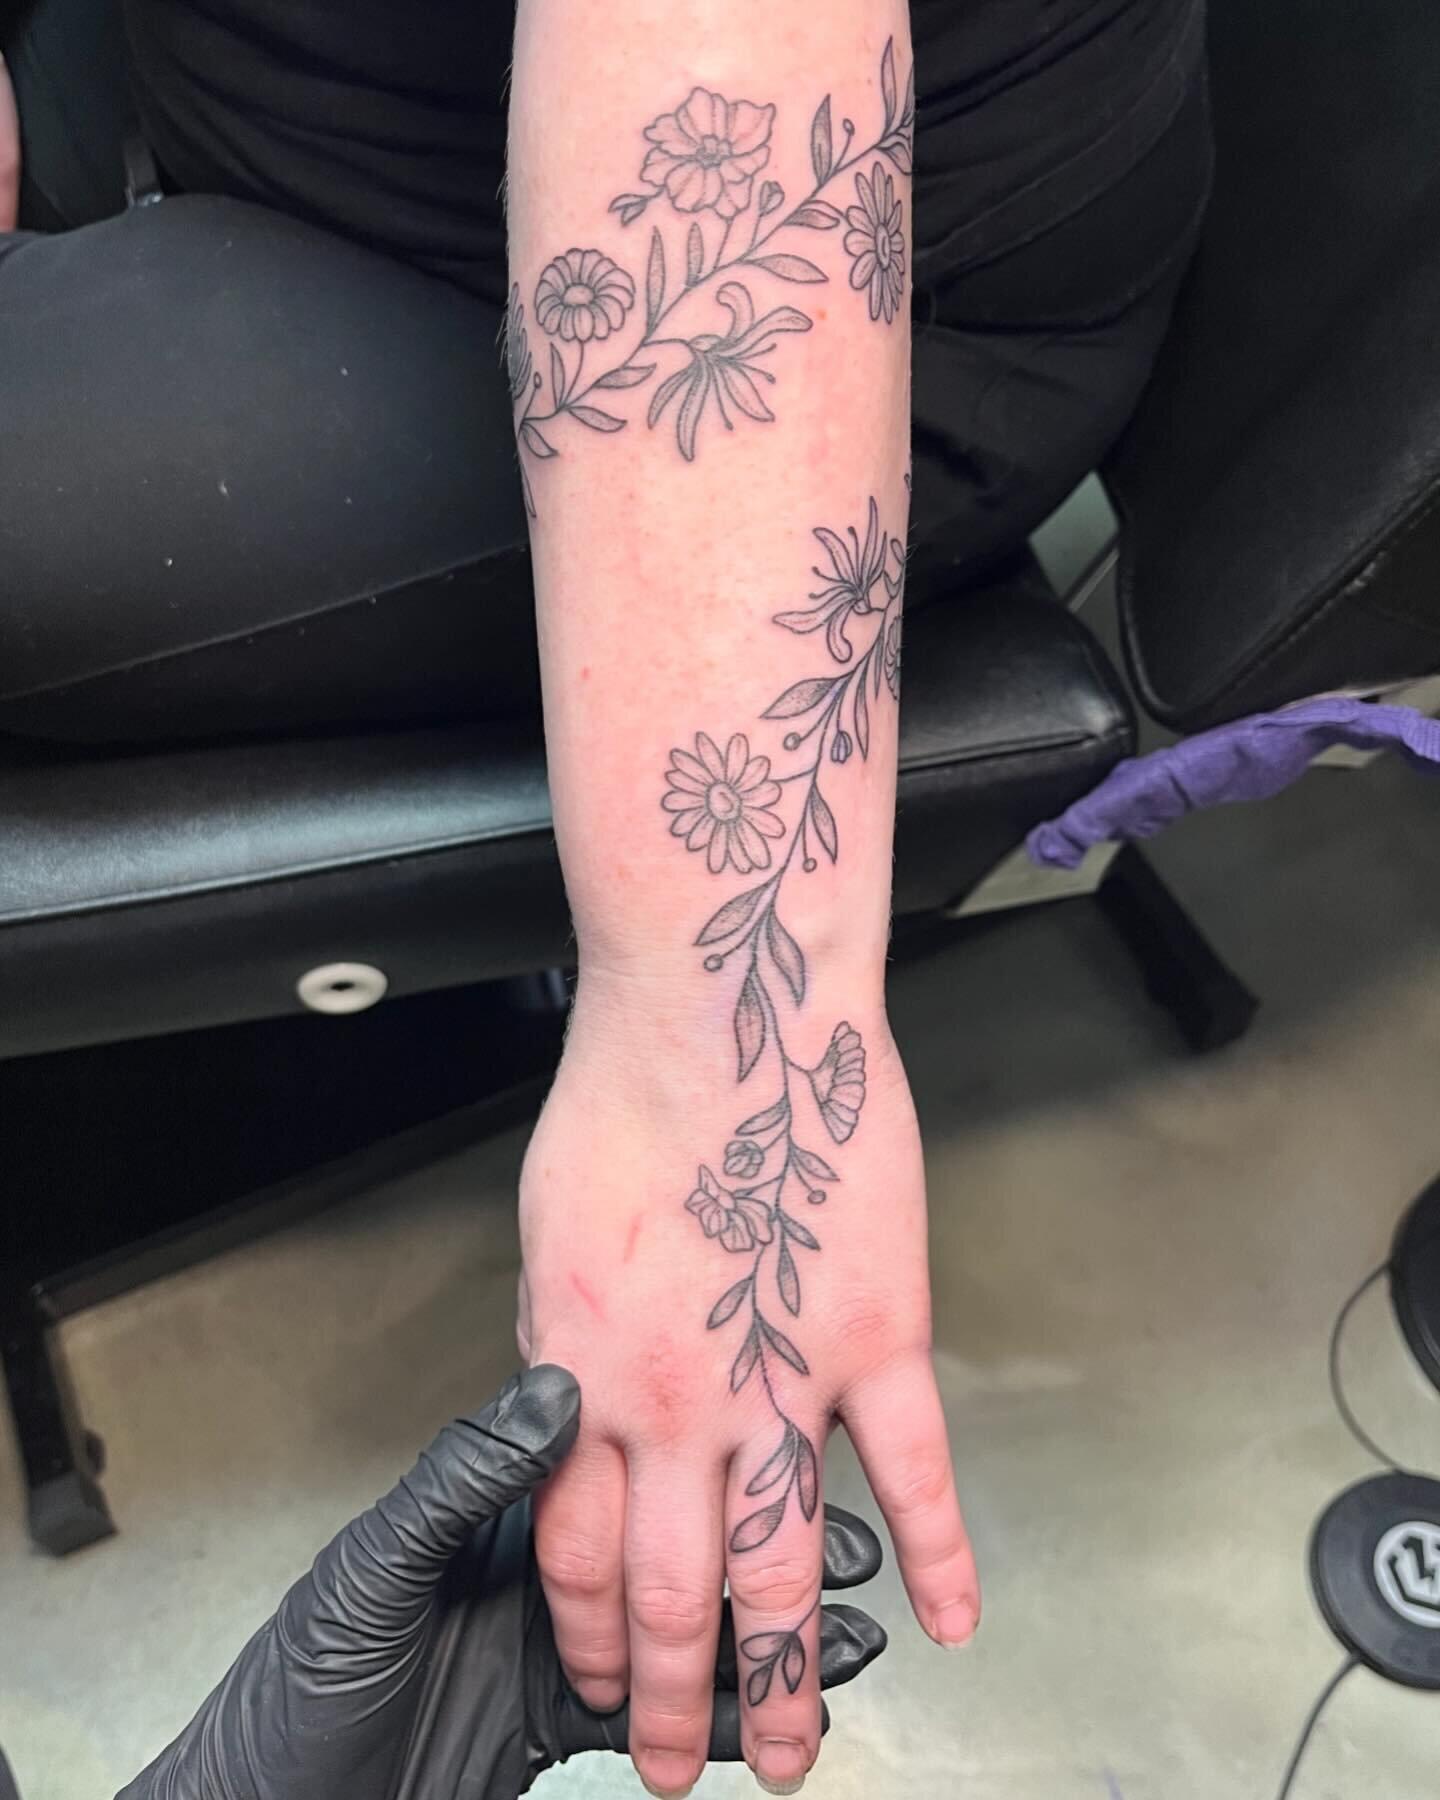 Pretty floral wrap that I loved tattooing 🌸
Booking April-May 📖
-
-
-
##tattoo #blackandgrey #blackandgreytattoo #flowers #flowertattoo #floraltattoo #tattooflowers #nature #spring #buffalotattooartist #tattooart #tattooartist #buffalove #buffalota